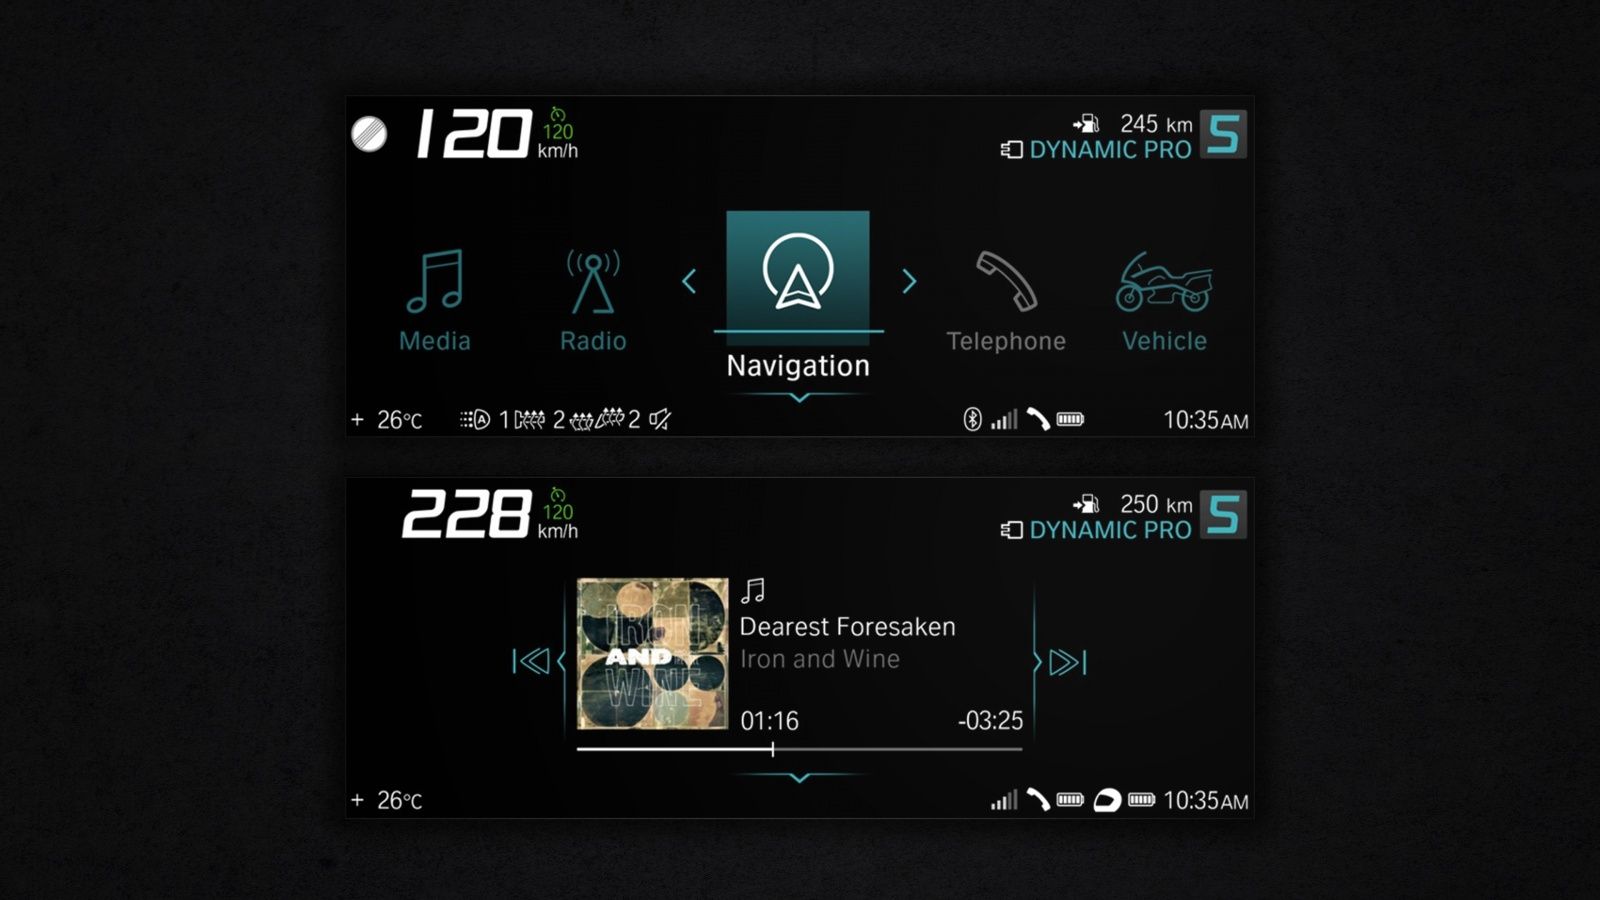 Main Menu and Music Player Screens